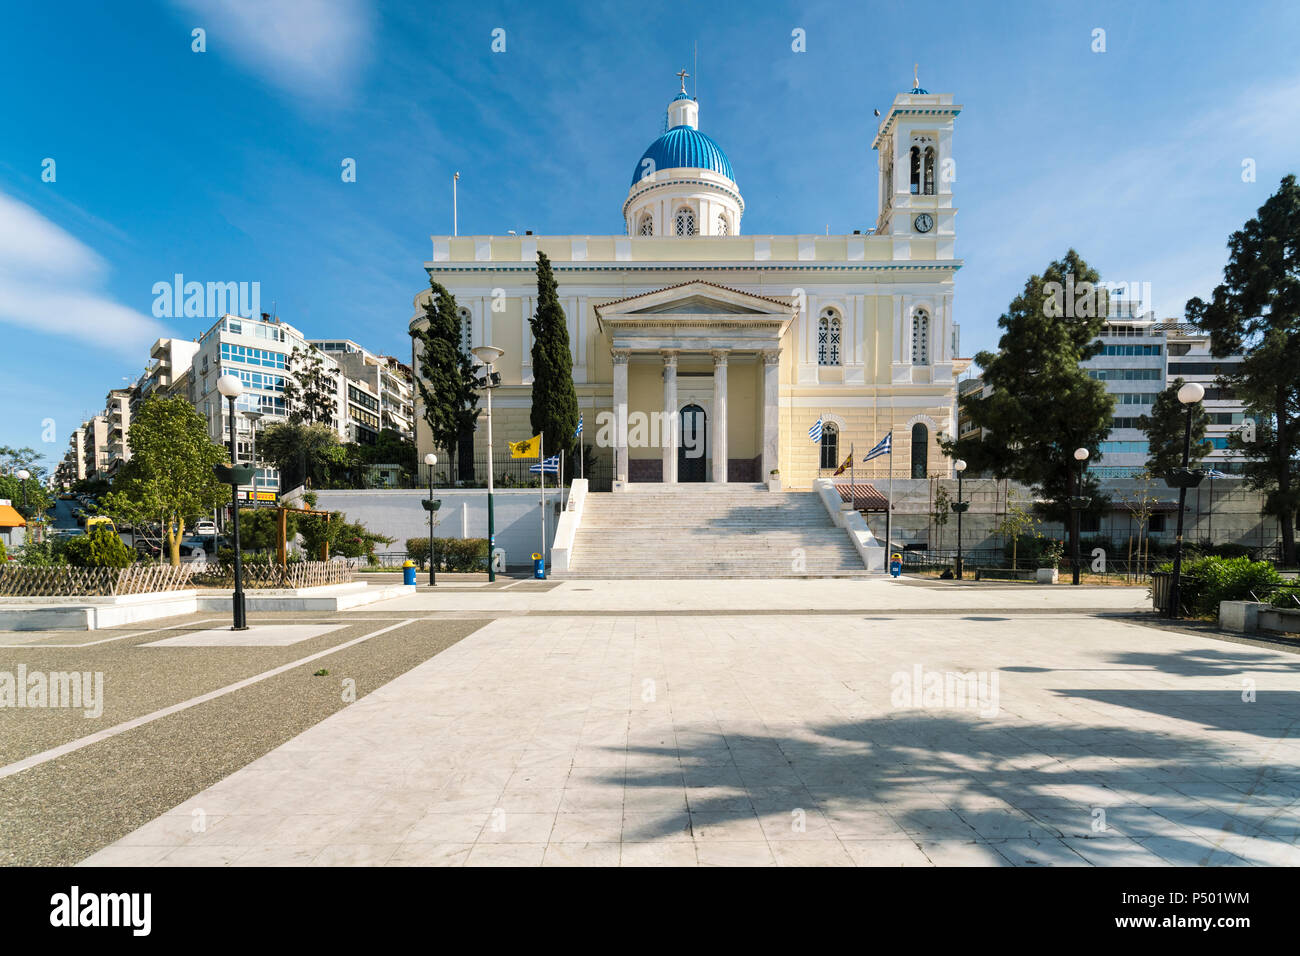 Greece, Piraeus, Orthodox church Stock Photo